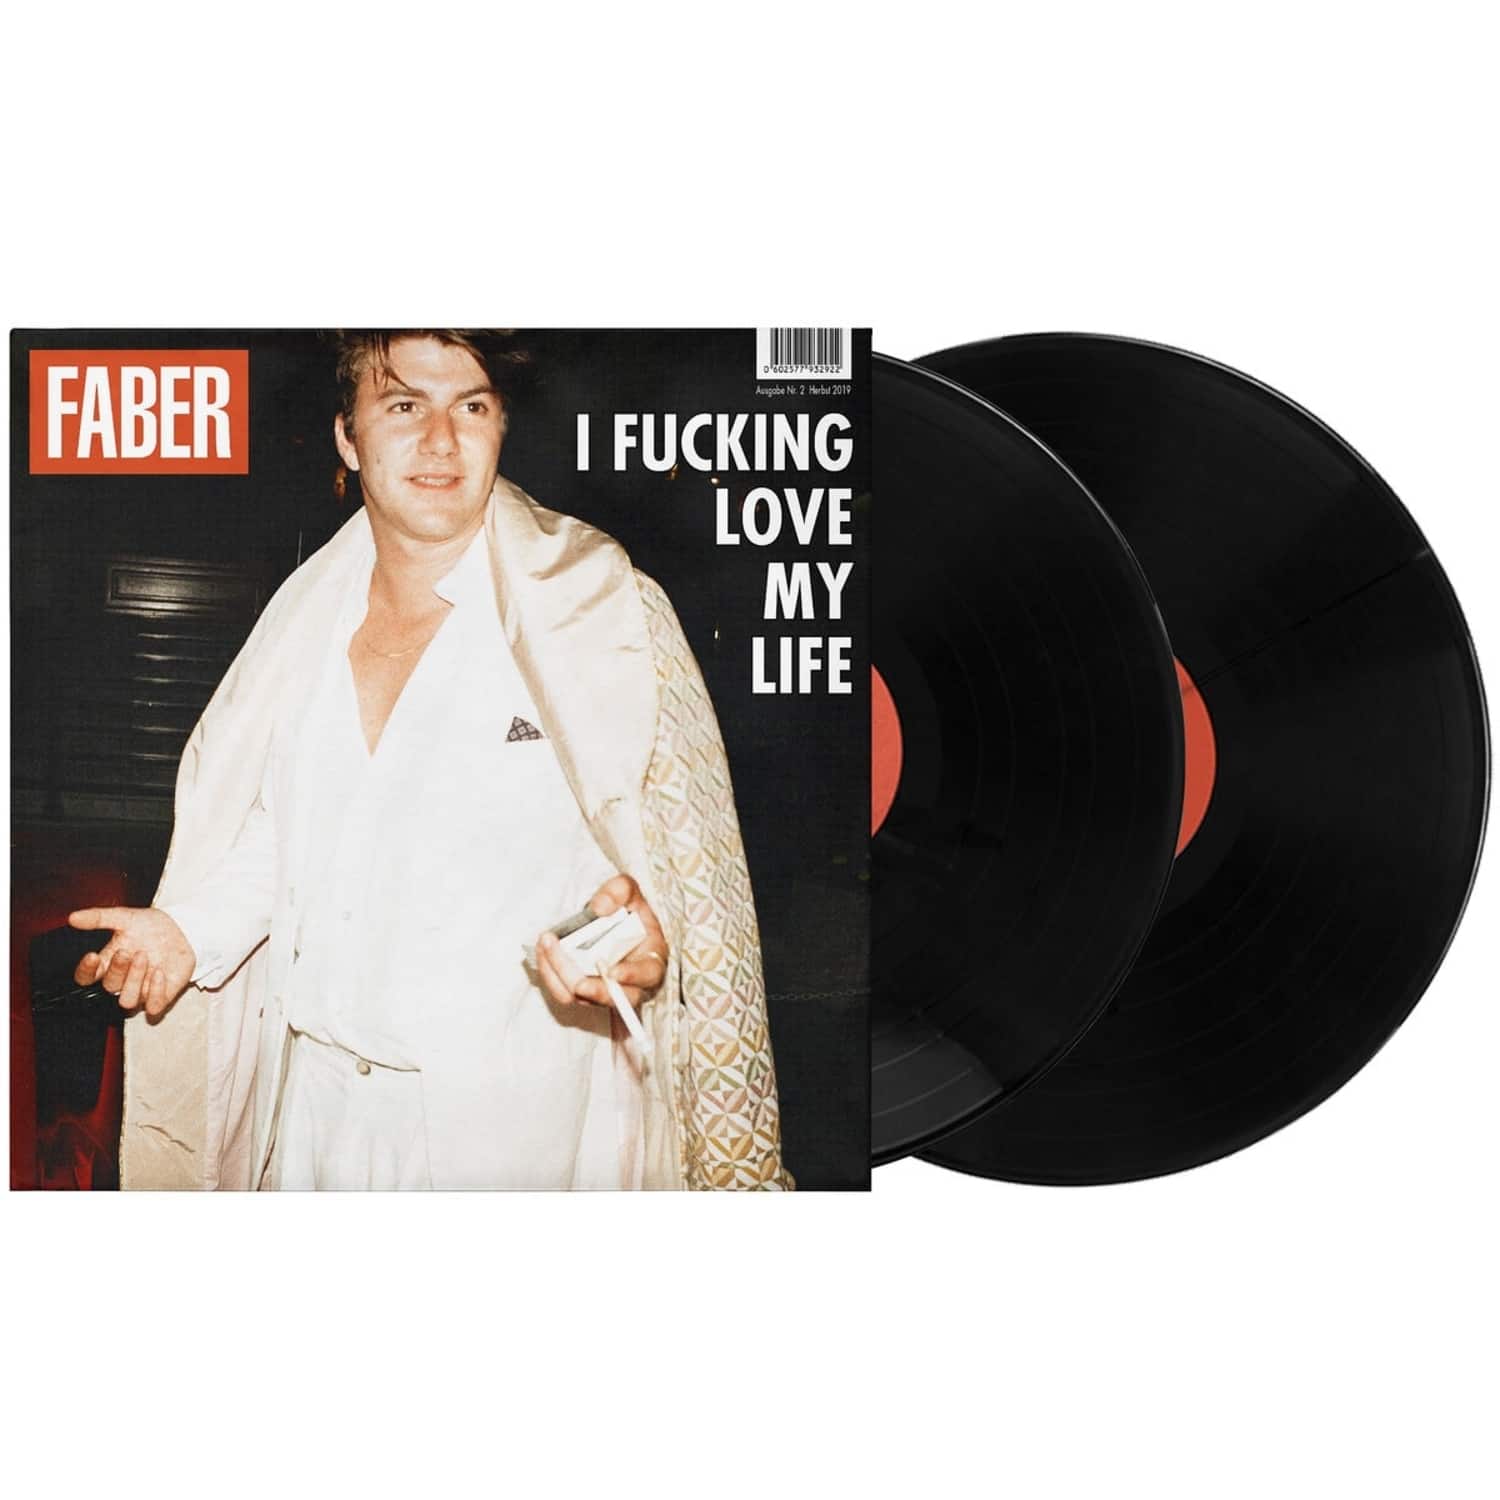 Faber - I FUCKING LOVE MY LIFE 